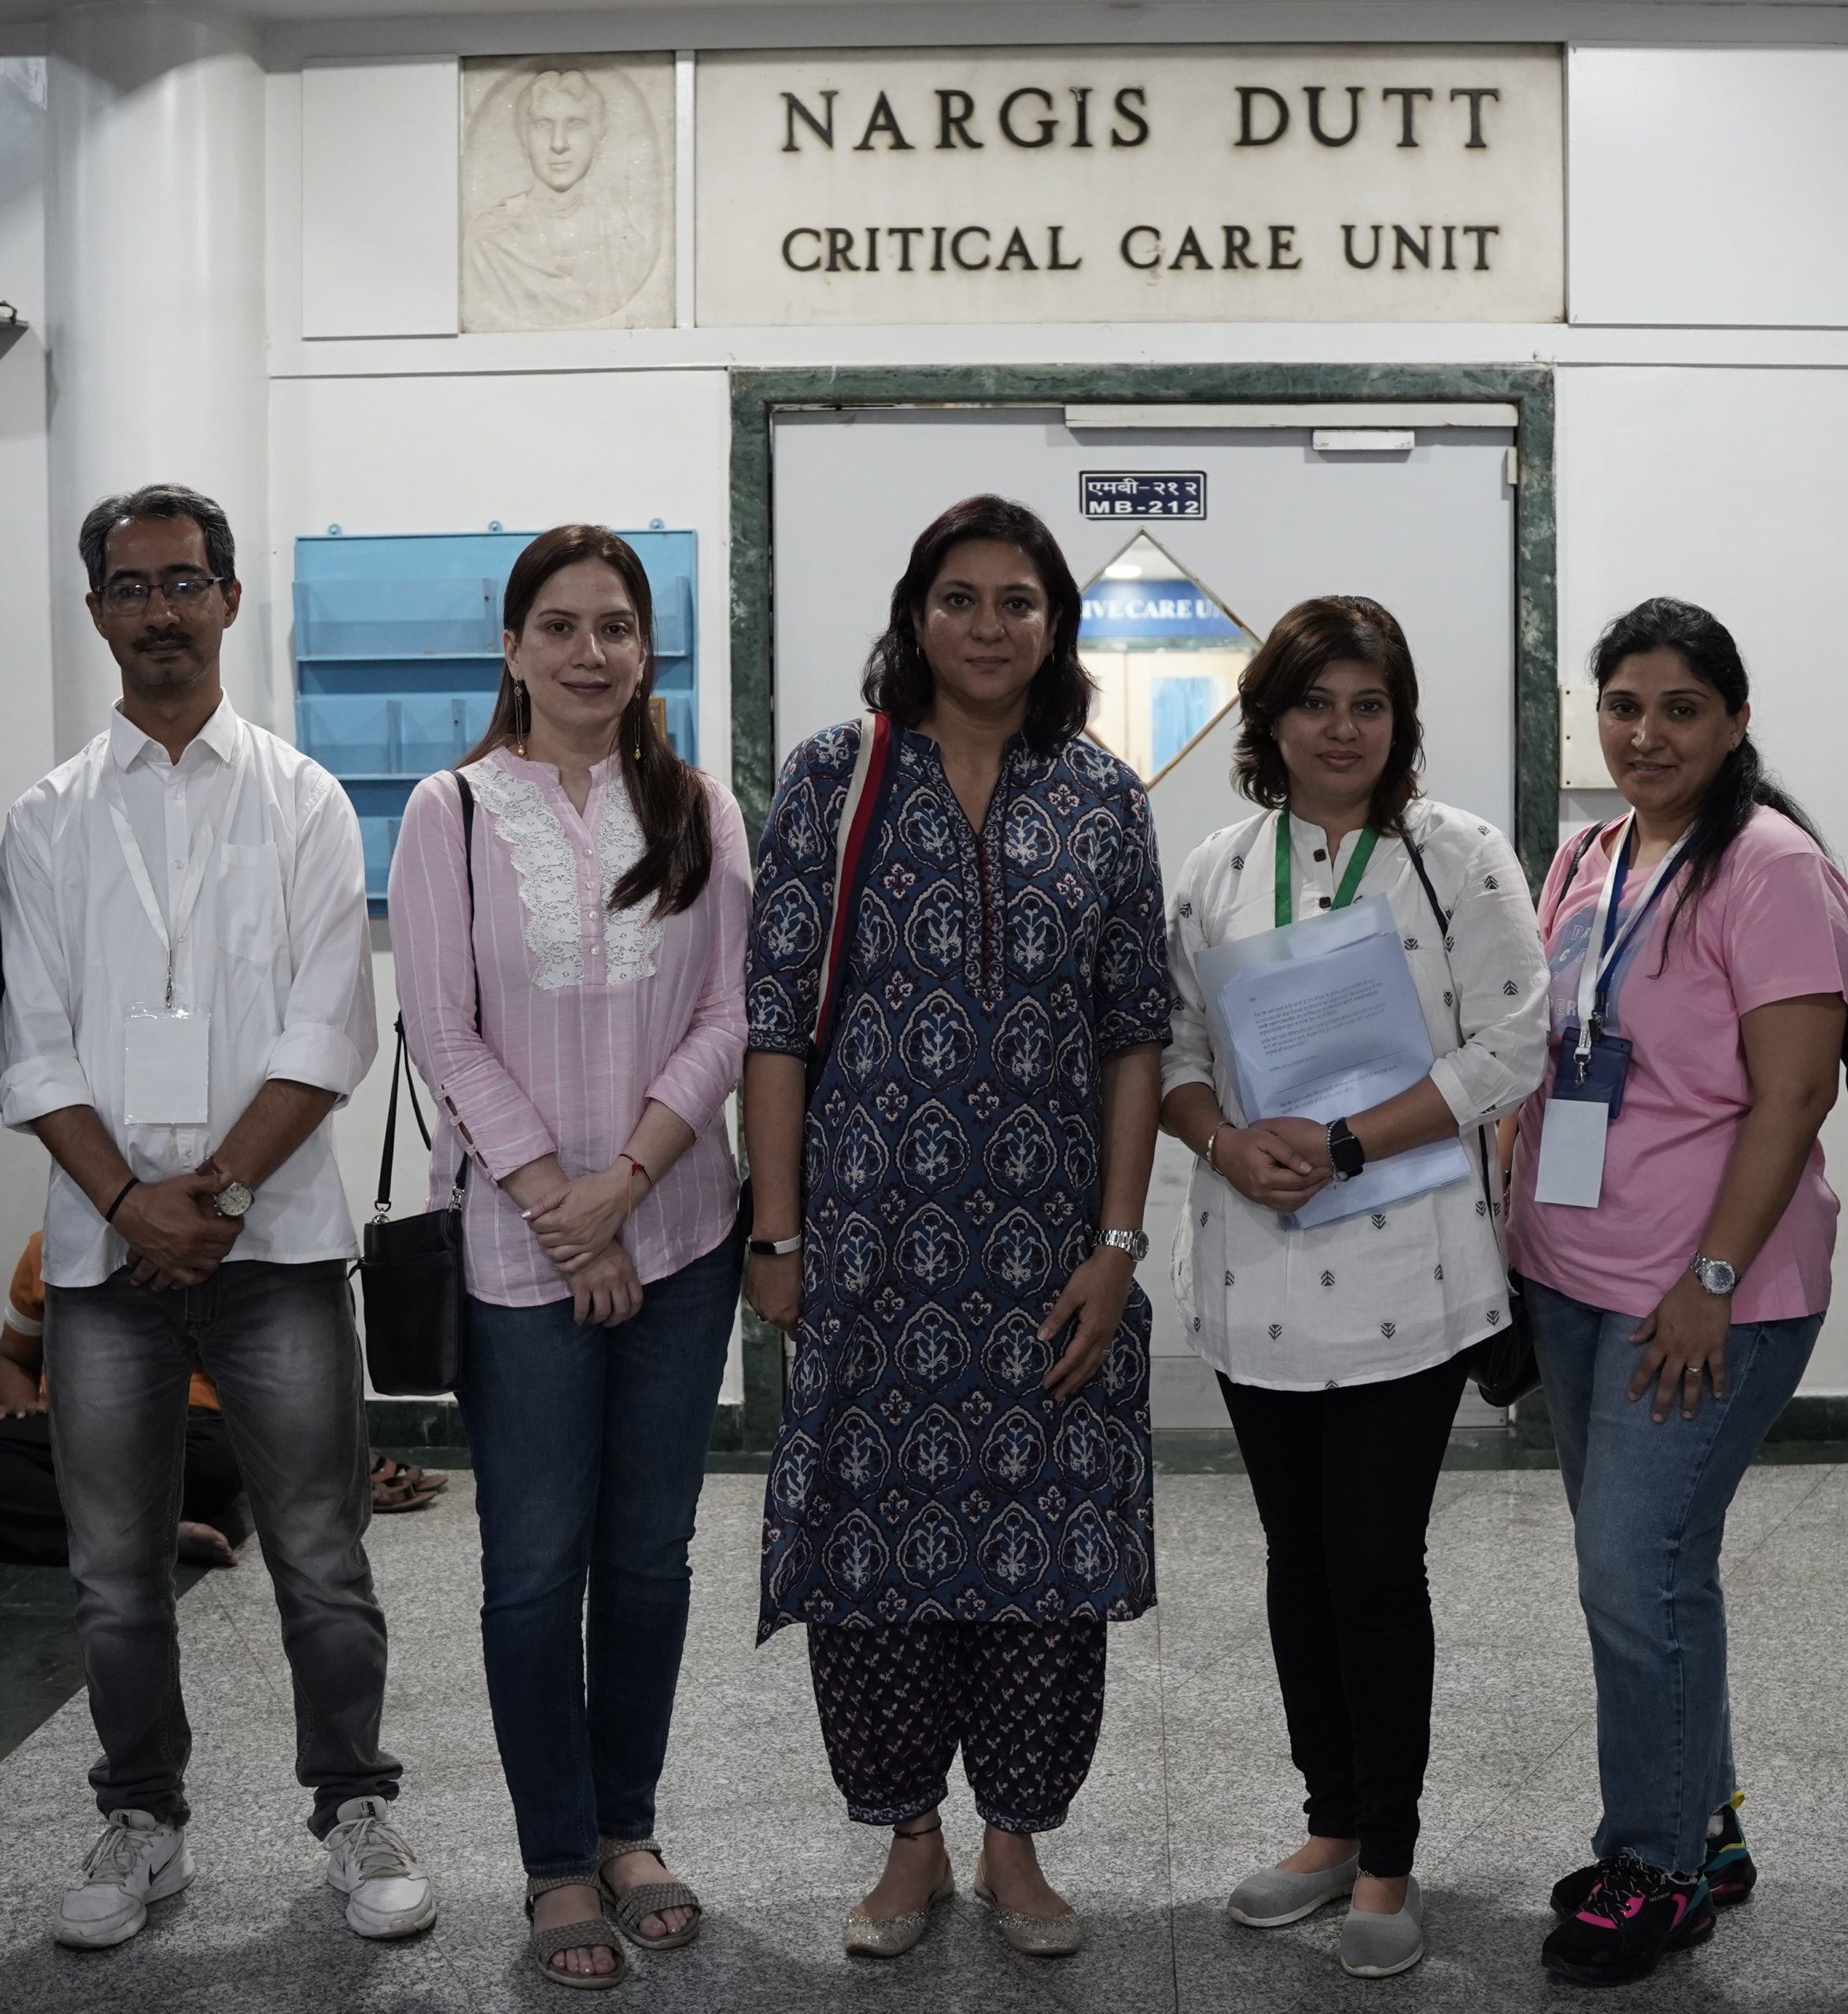 Nargis Dutt Foundation: Support for underprivileged cancer patients